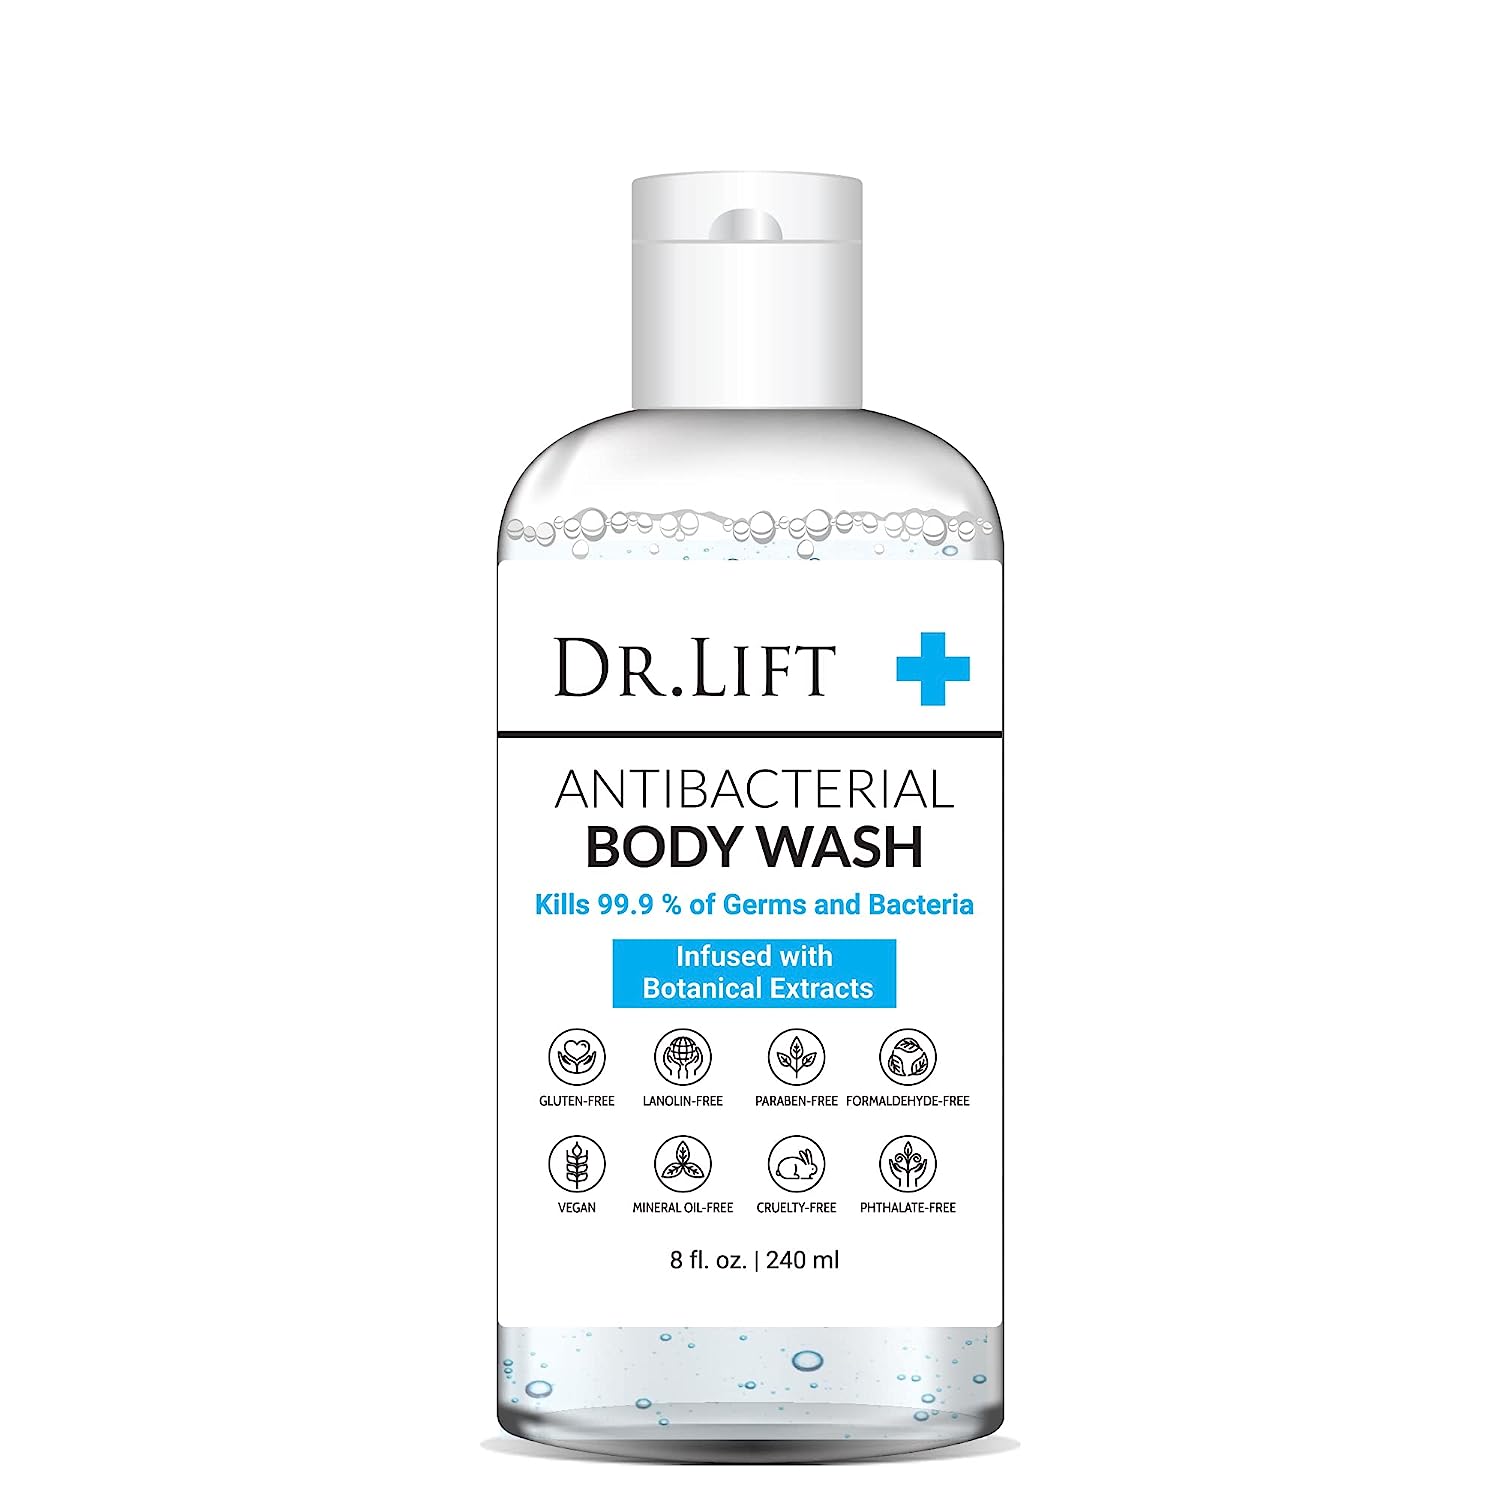 DR. LIFT Antibacterial Body Wash, 8  - Gentle & Effective Shower Gel - Made in America